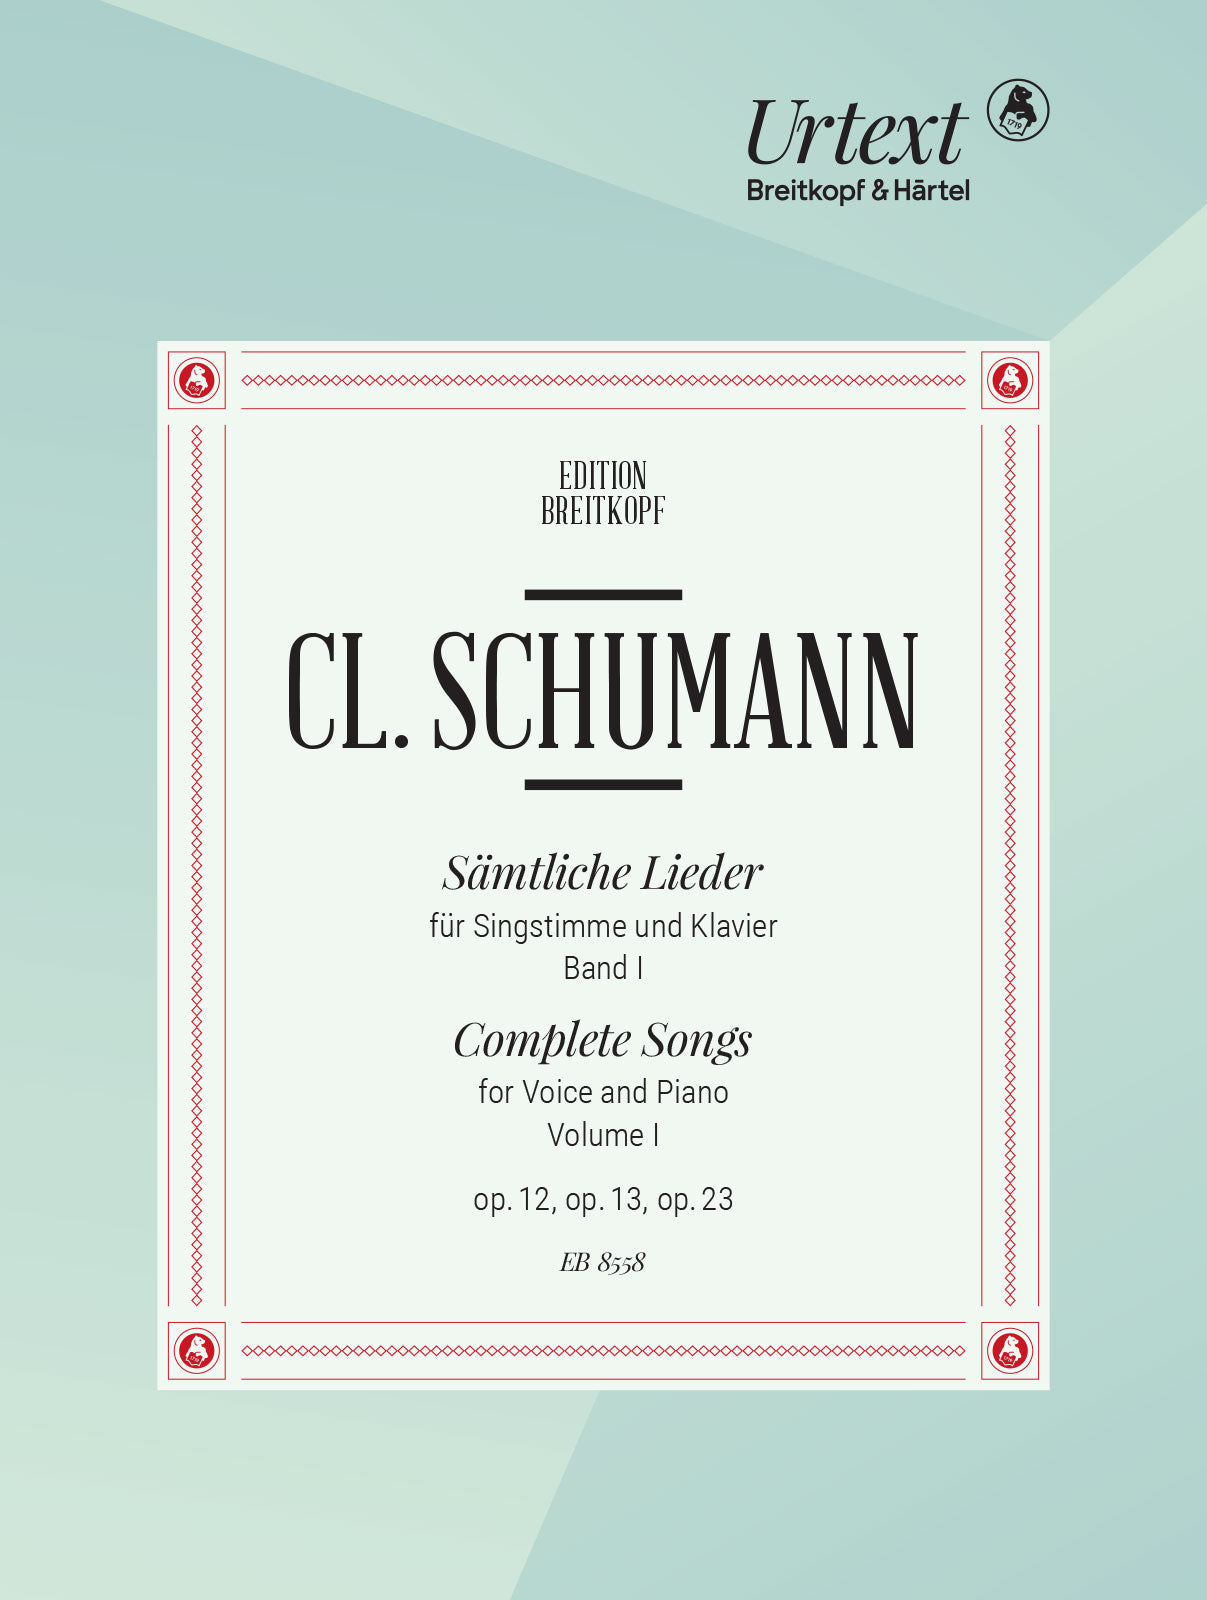 C. Schumann: Complete Songs - Volume 1 (Opp. 12, 13, 23)